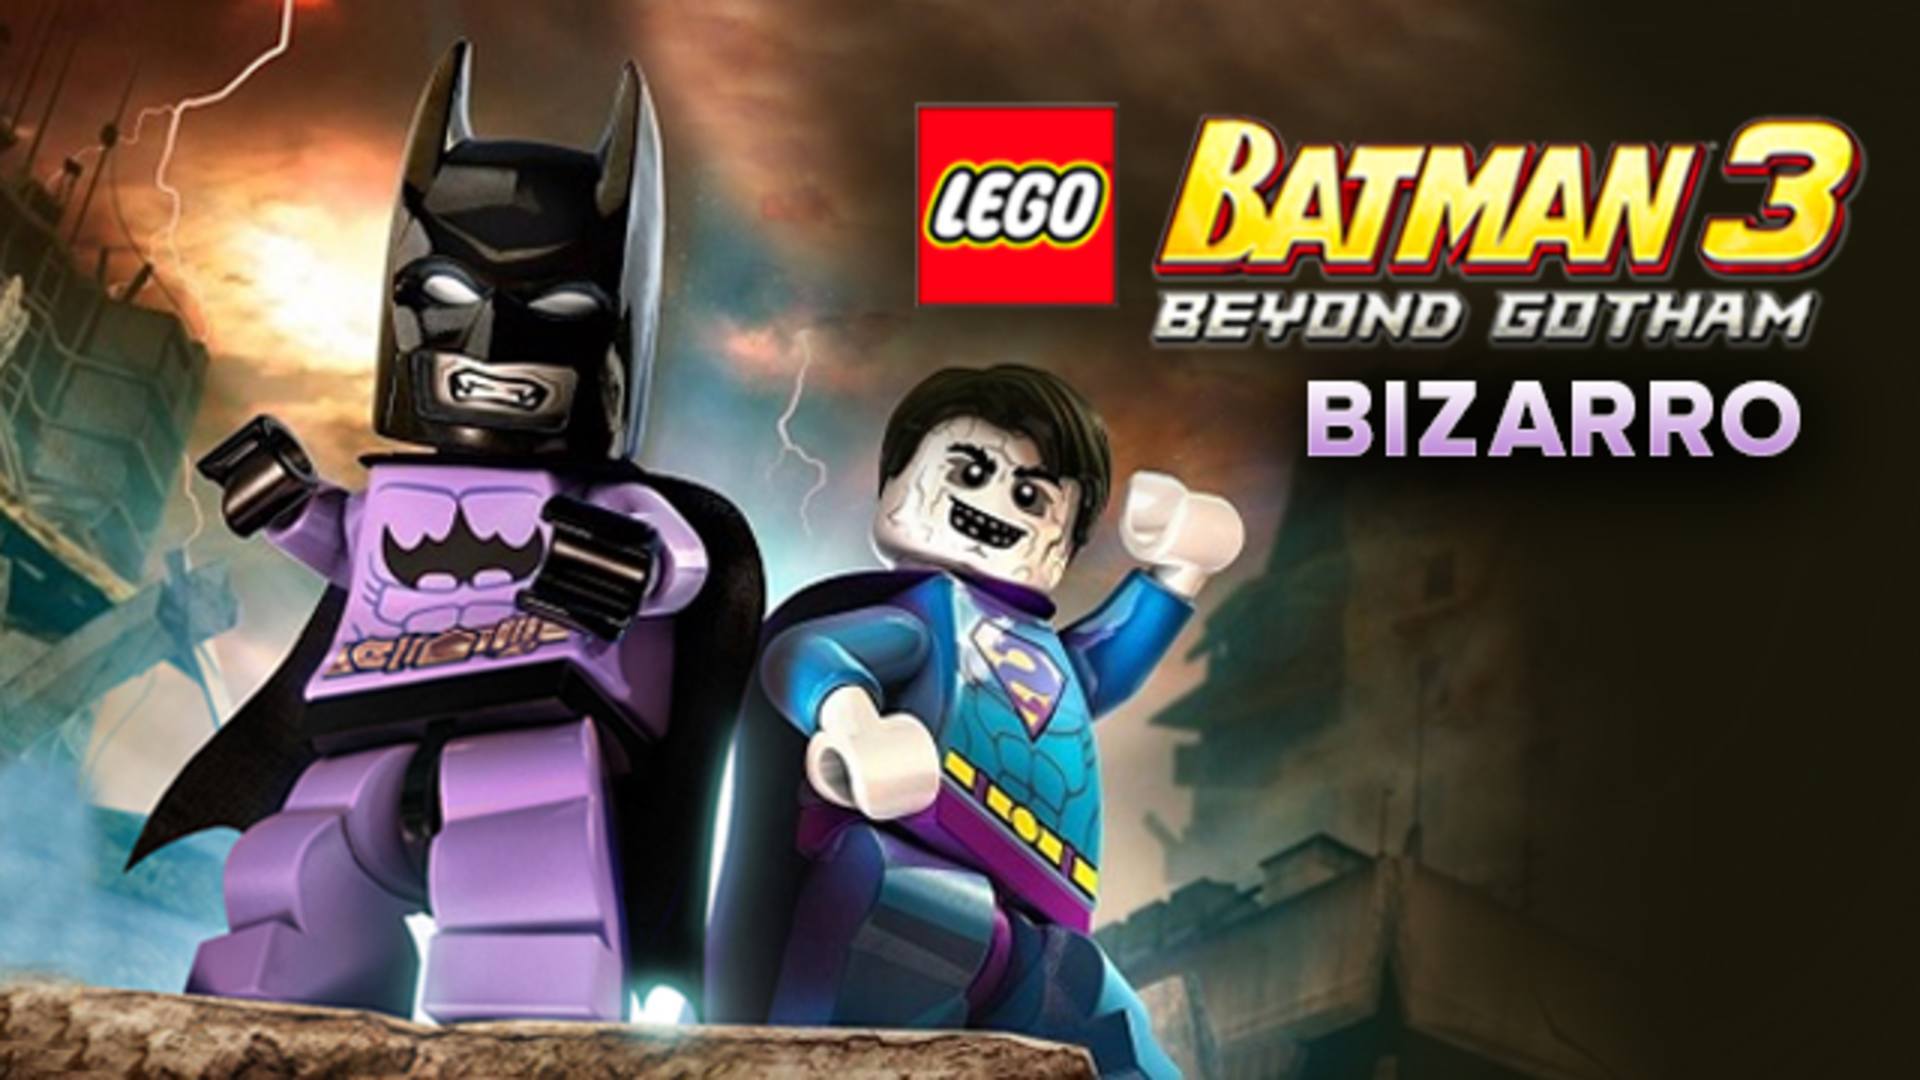 LEGO Batman 3 Beyond Gotham The Squad DLC-BAT